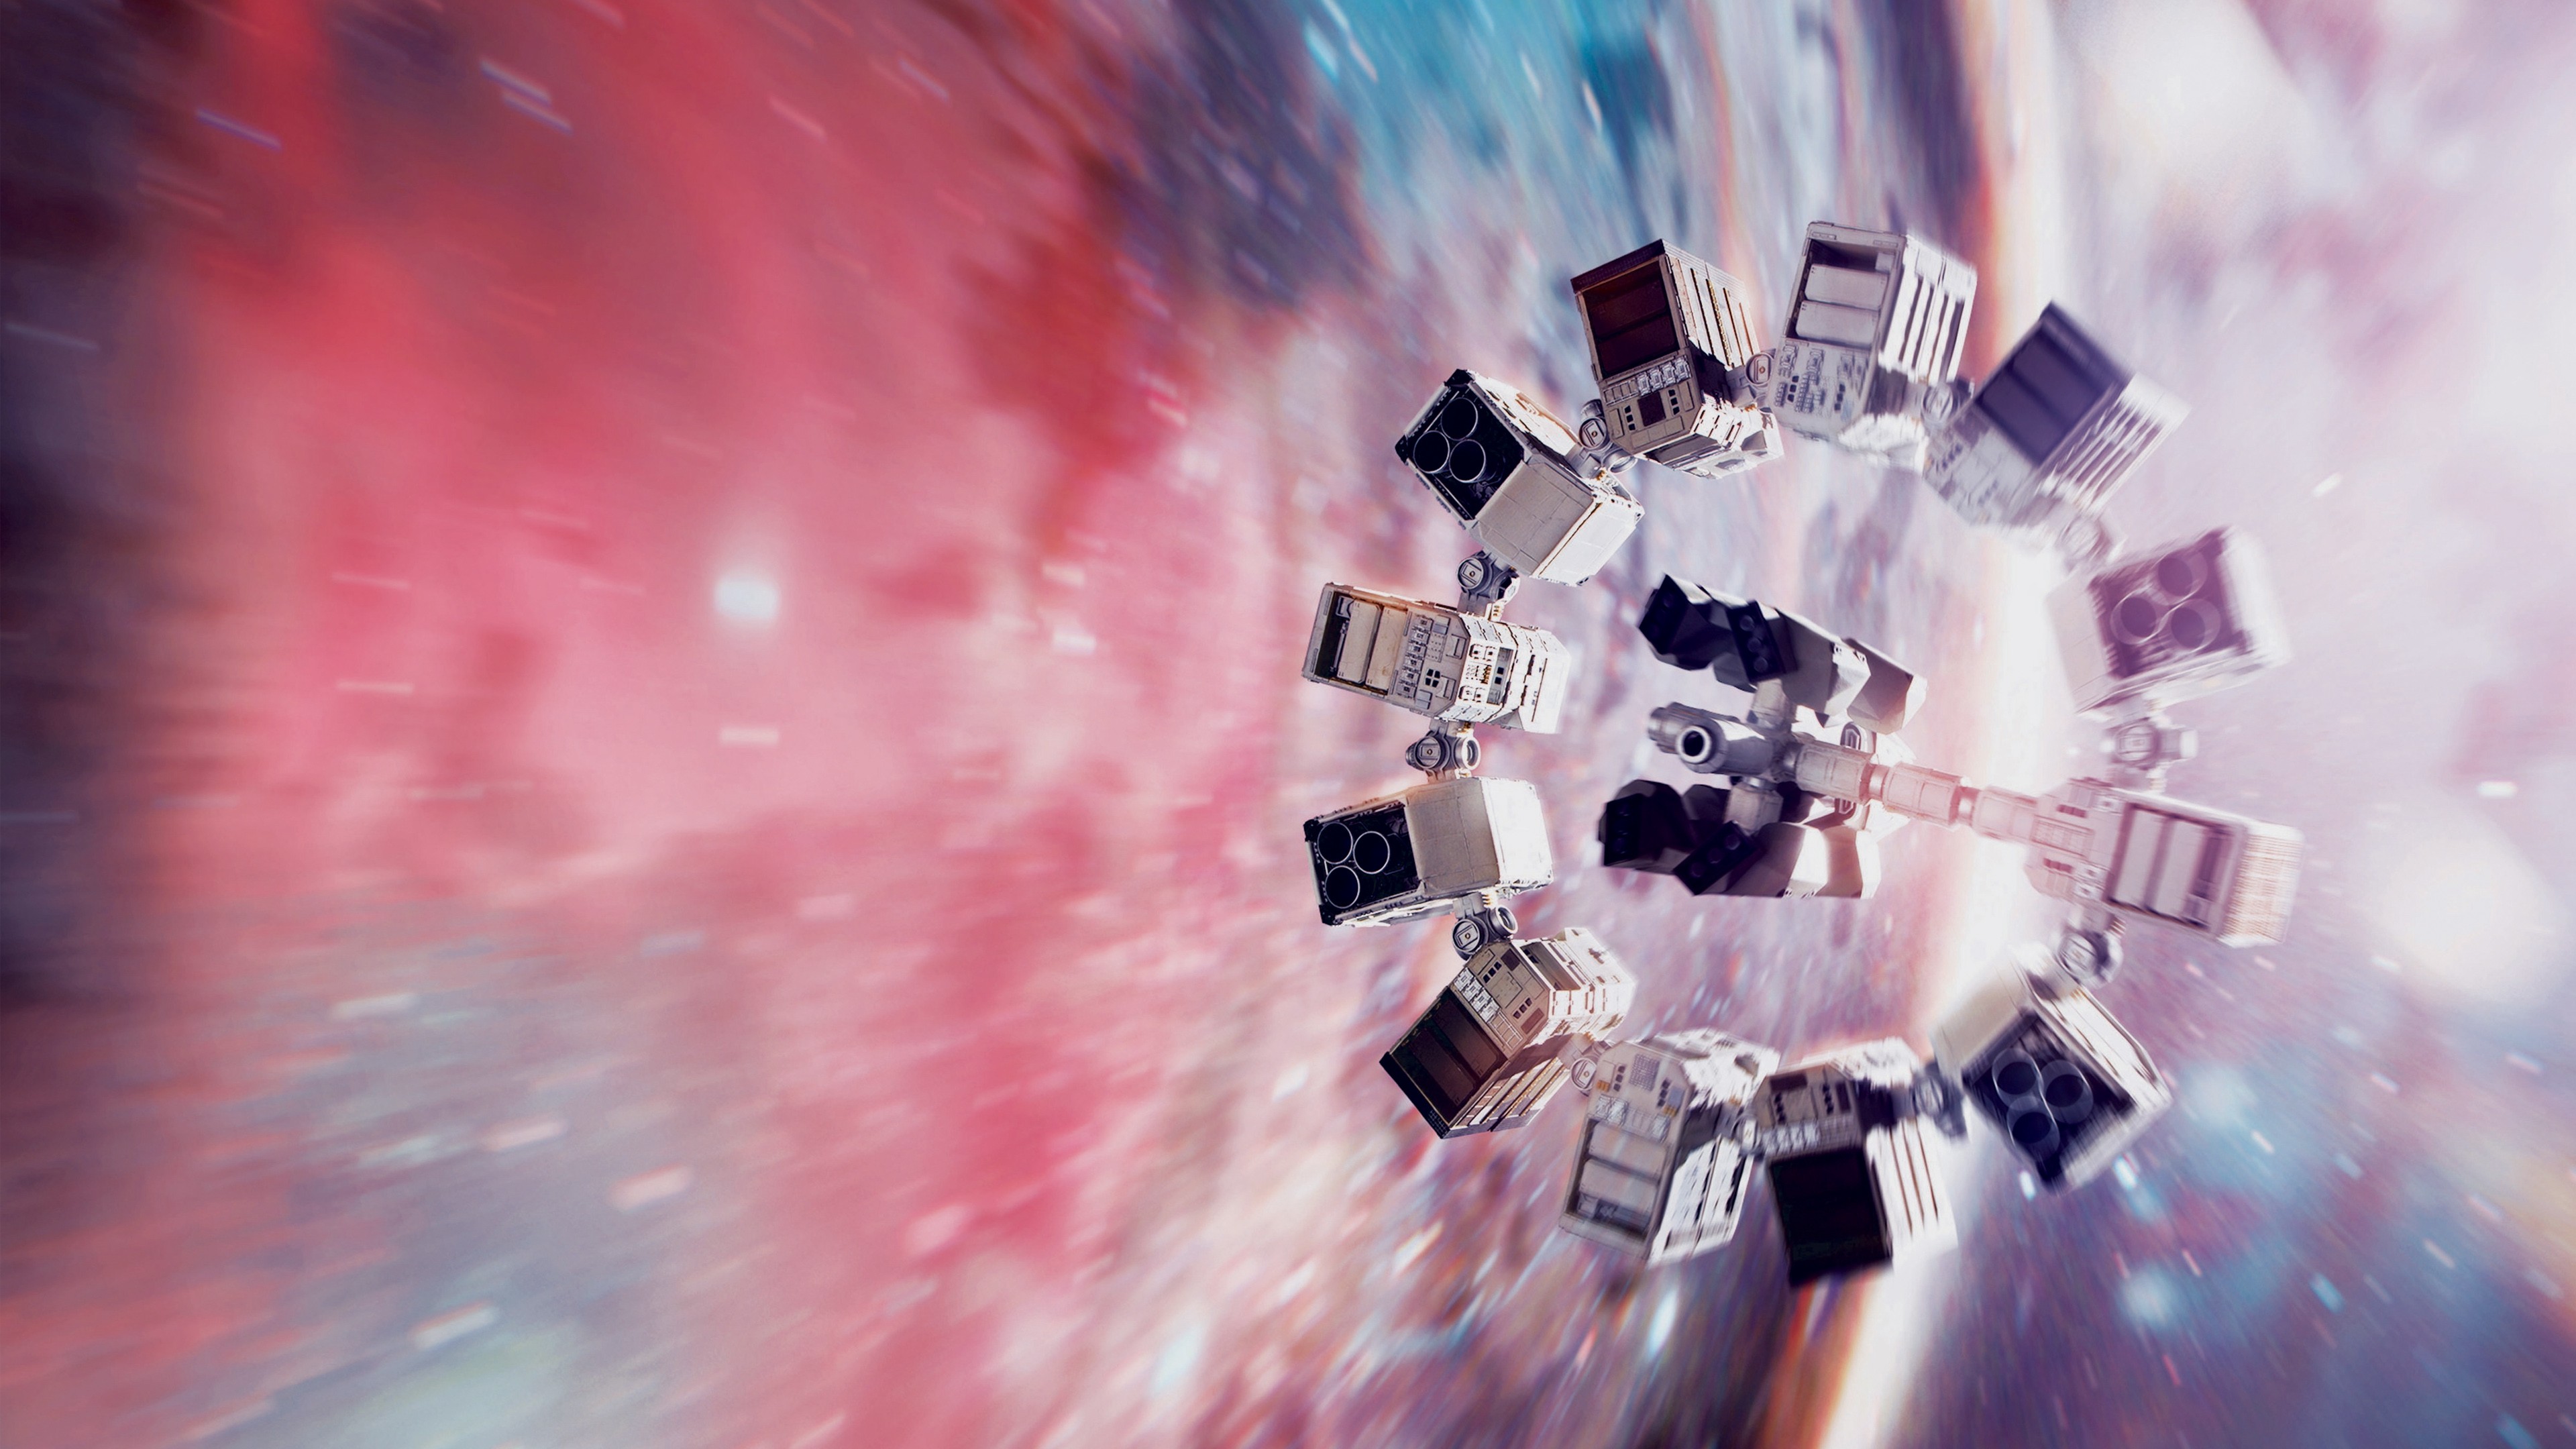 interstellare tapete 4k,rosa,rot,lila,grafikdesign,himmel